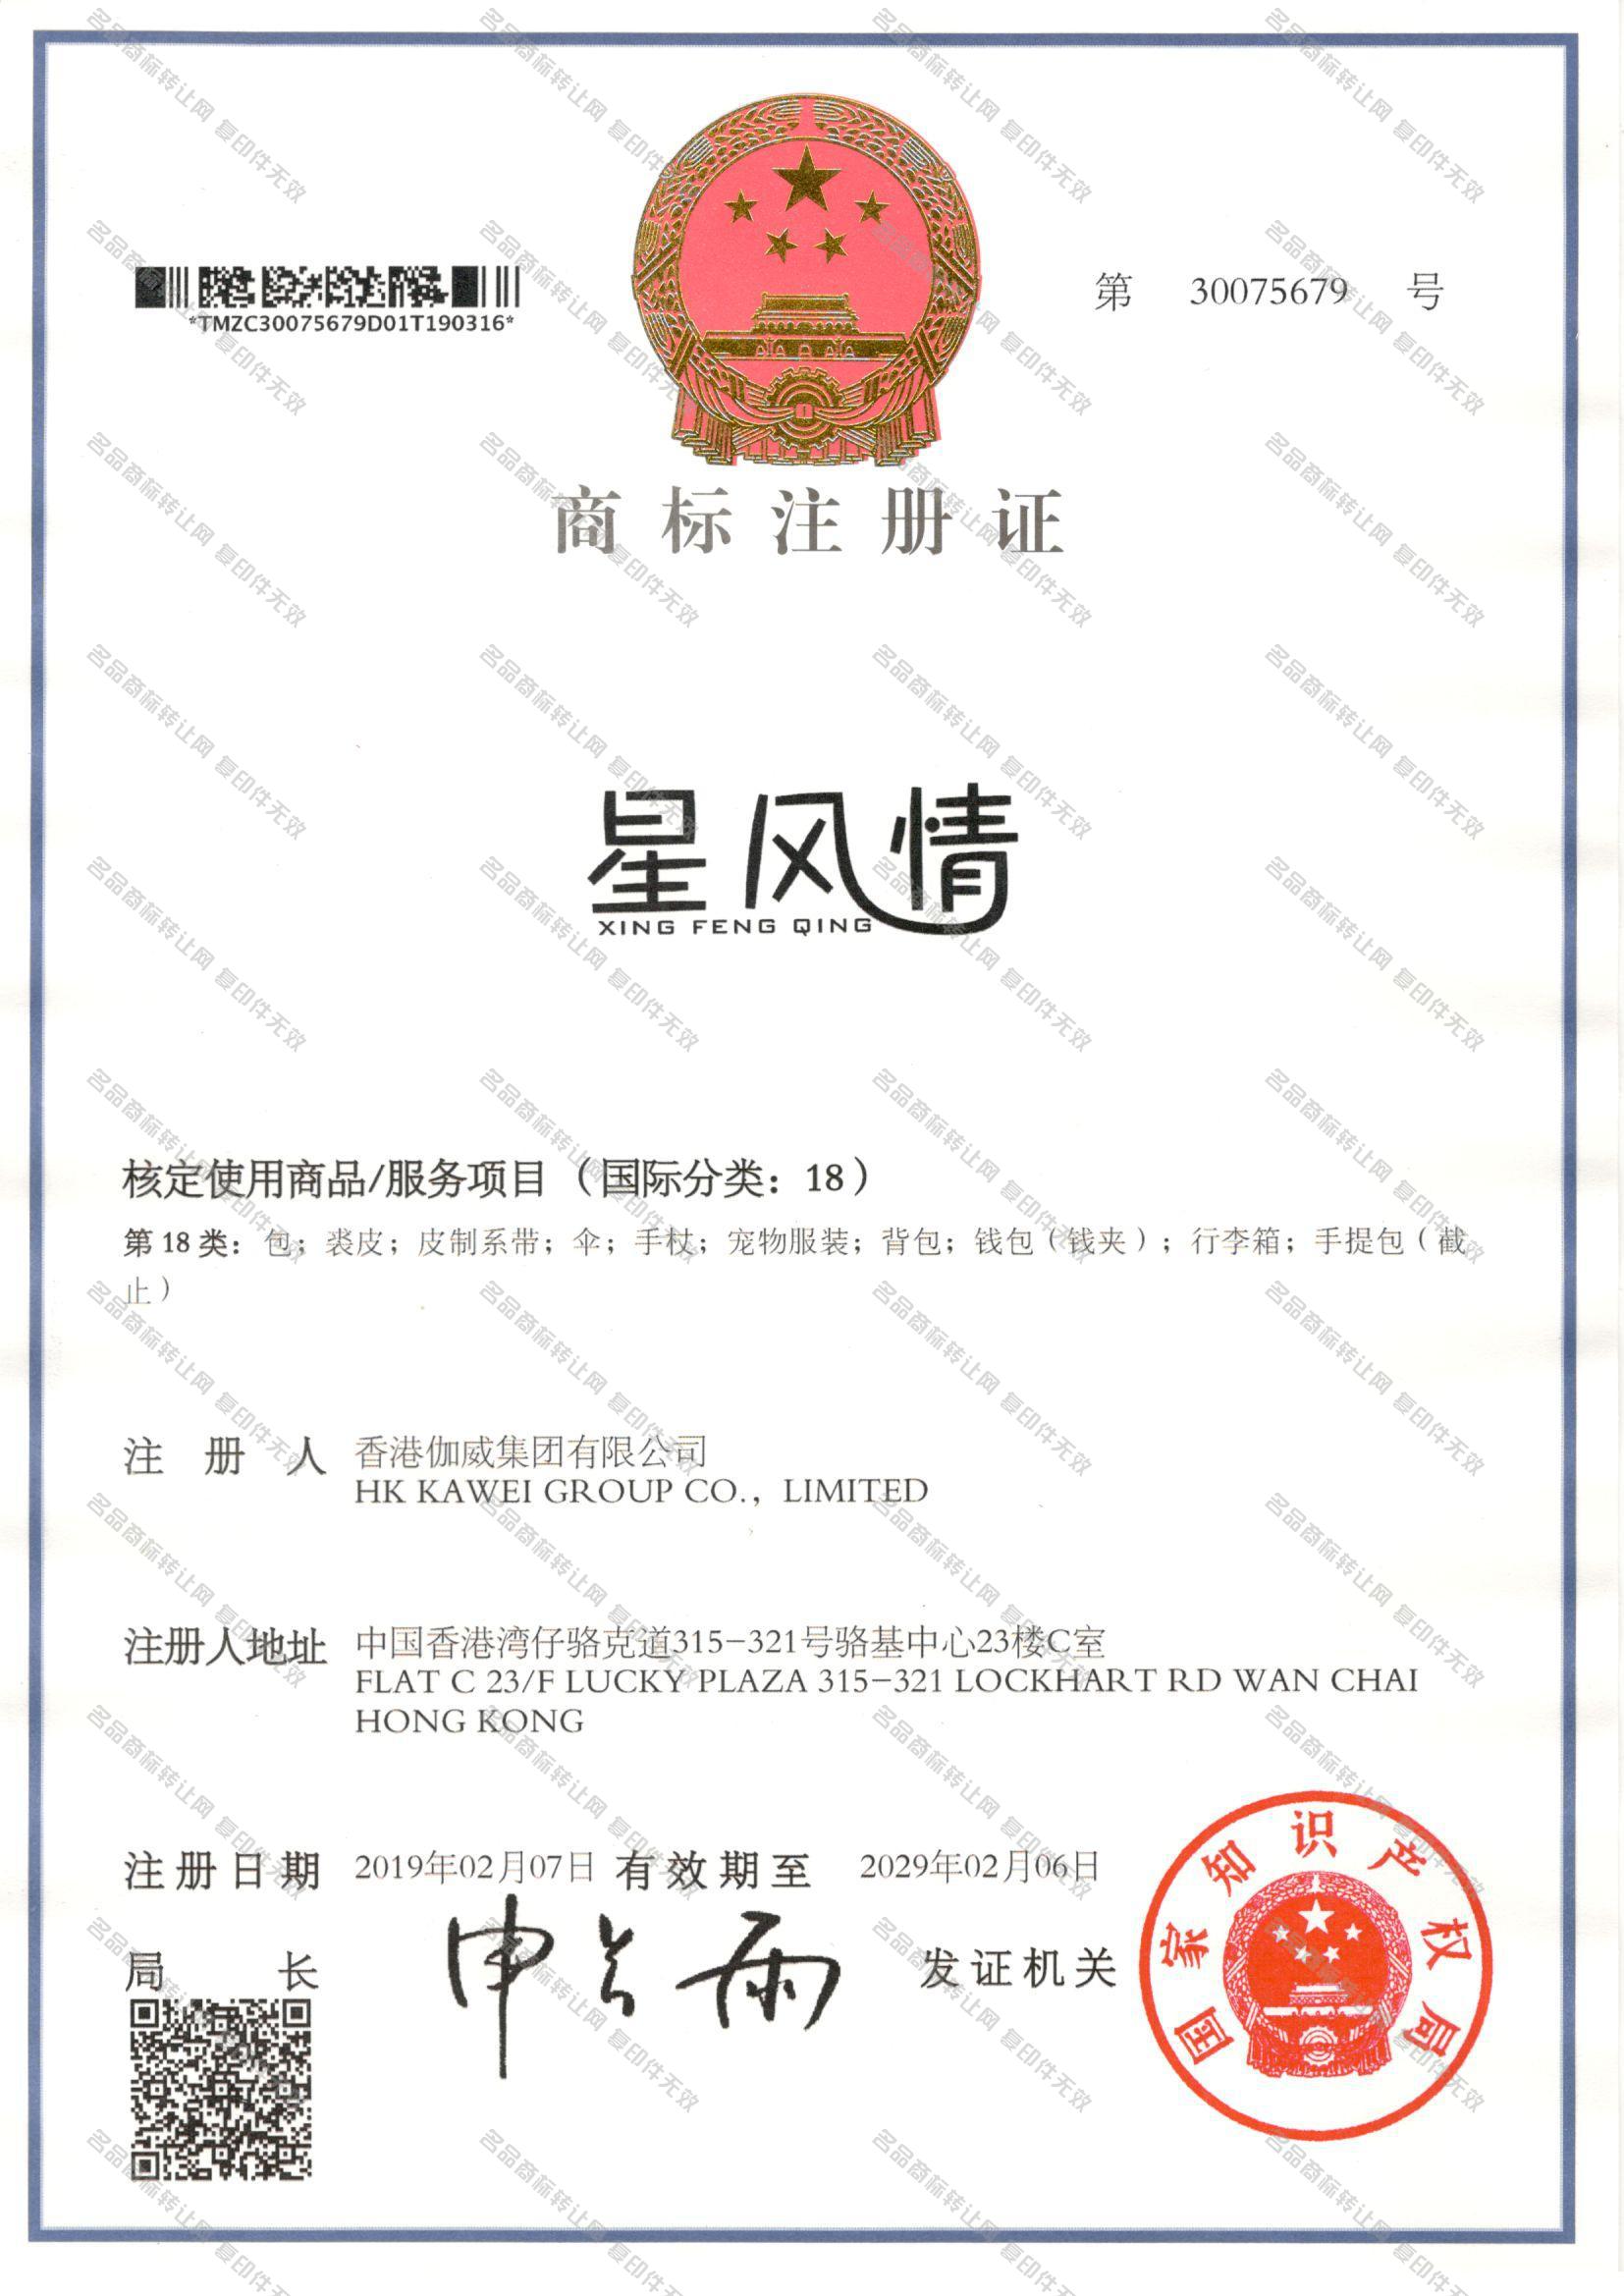 星风情 XINGFENGQING注册证